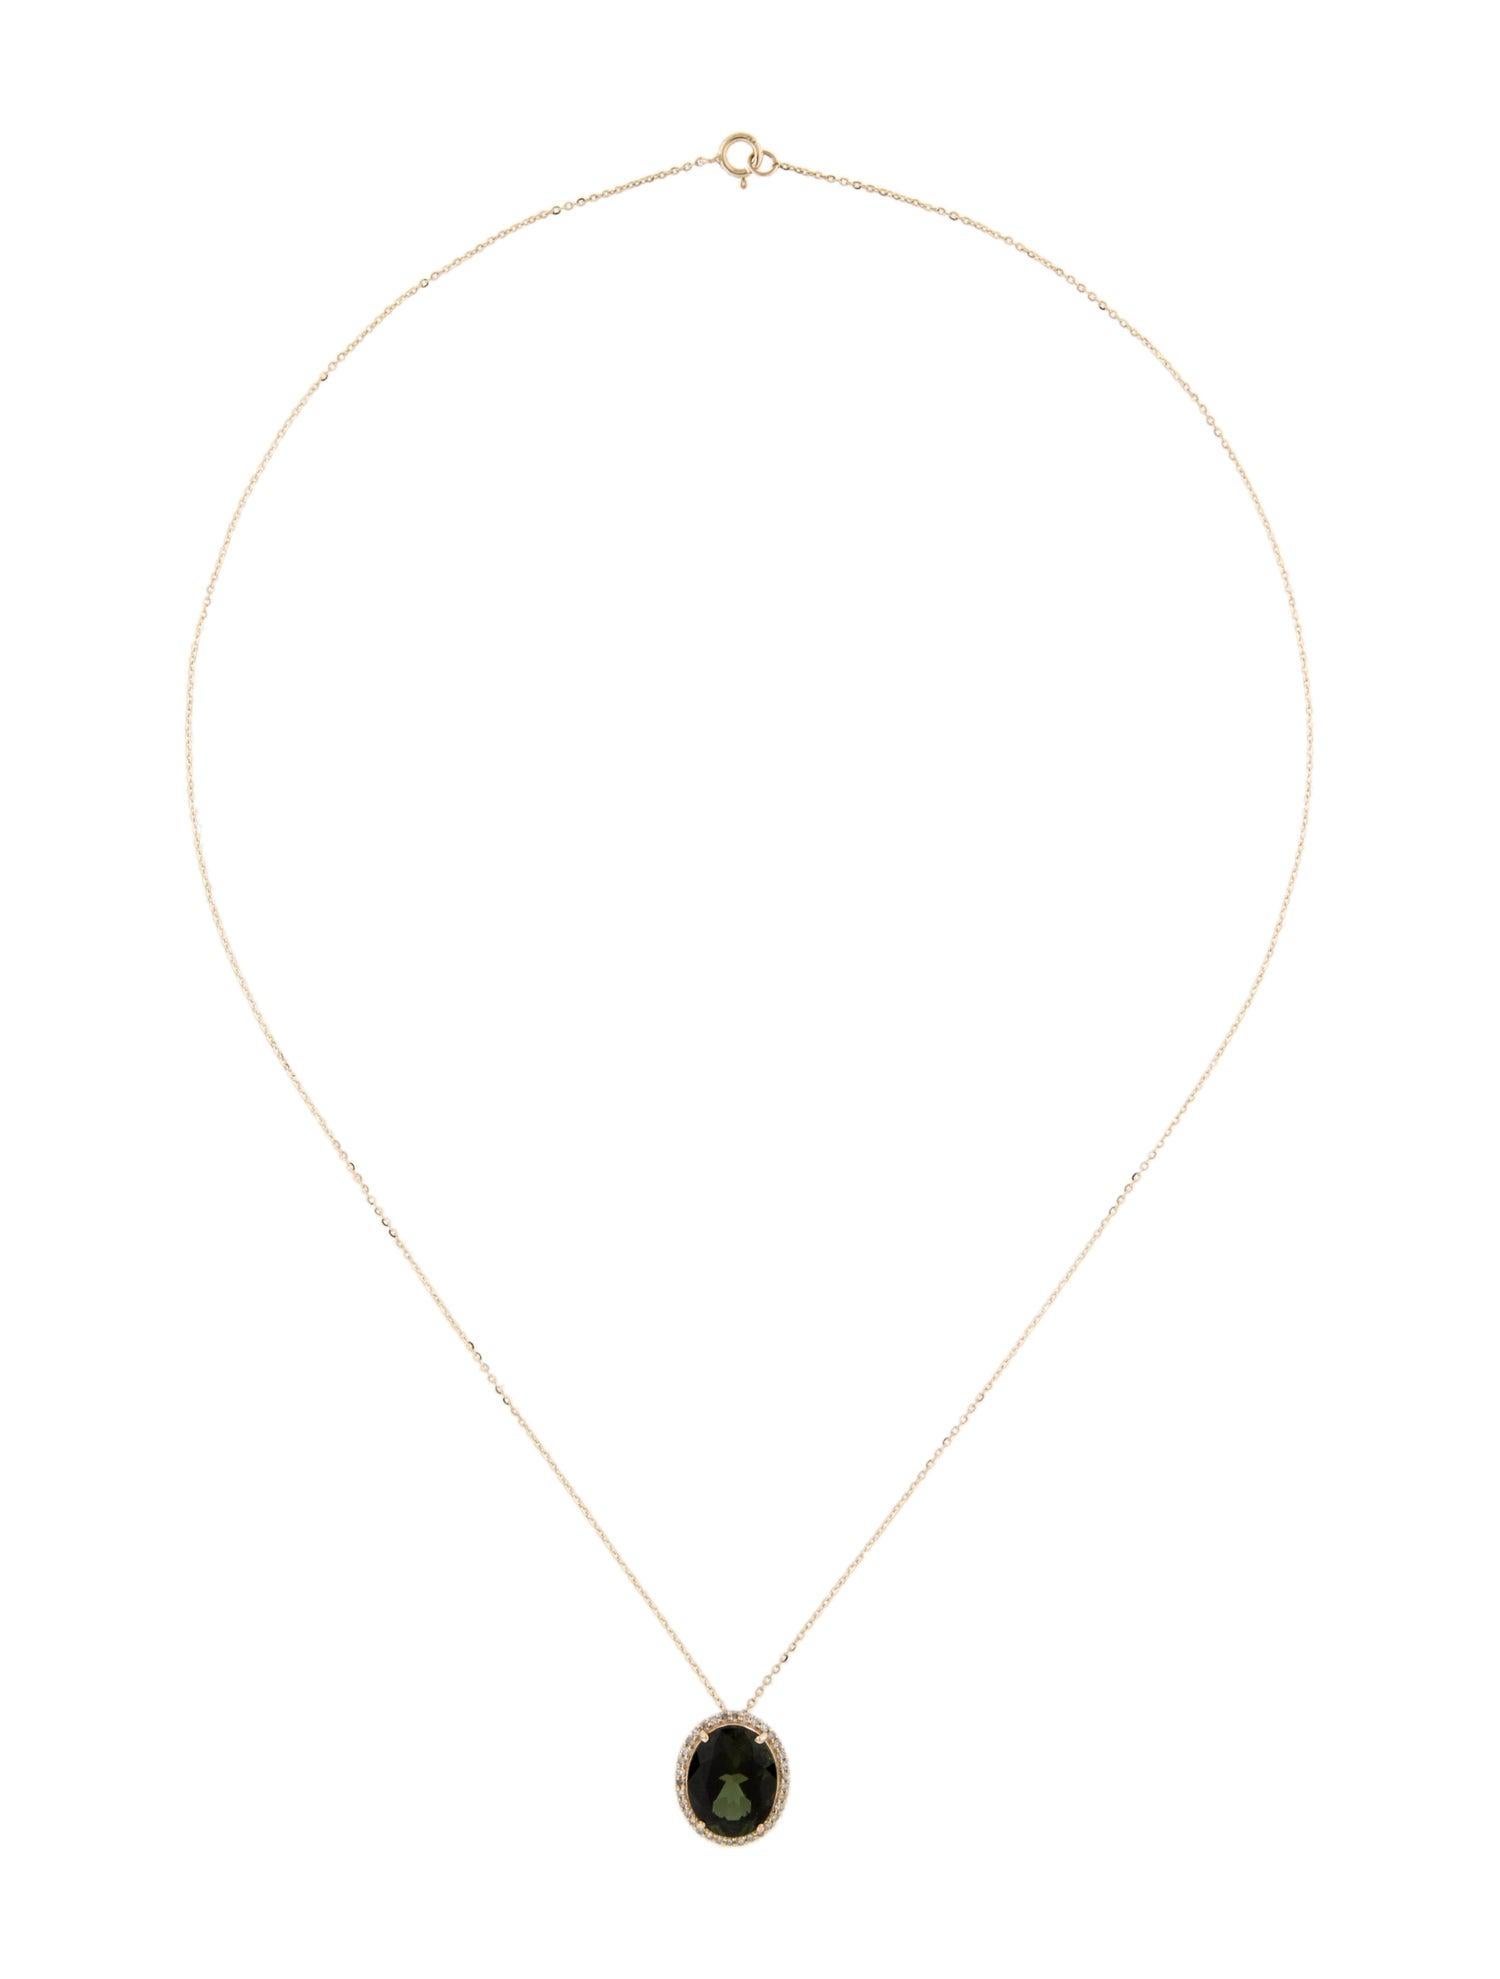 Brilliant Cut 14K Tourmaline & Diamond Pendant Necklace - Exquisite Gemstone Jewelry Statement For Sale